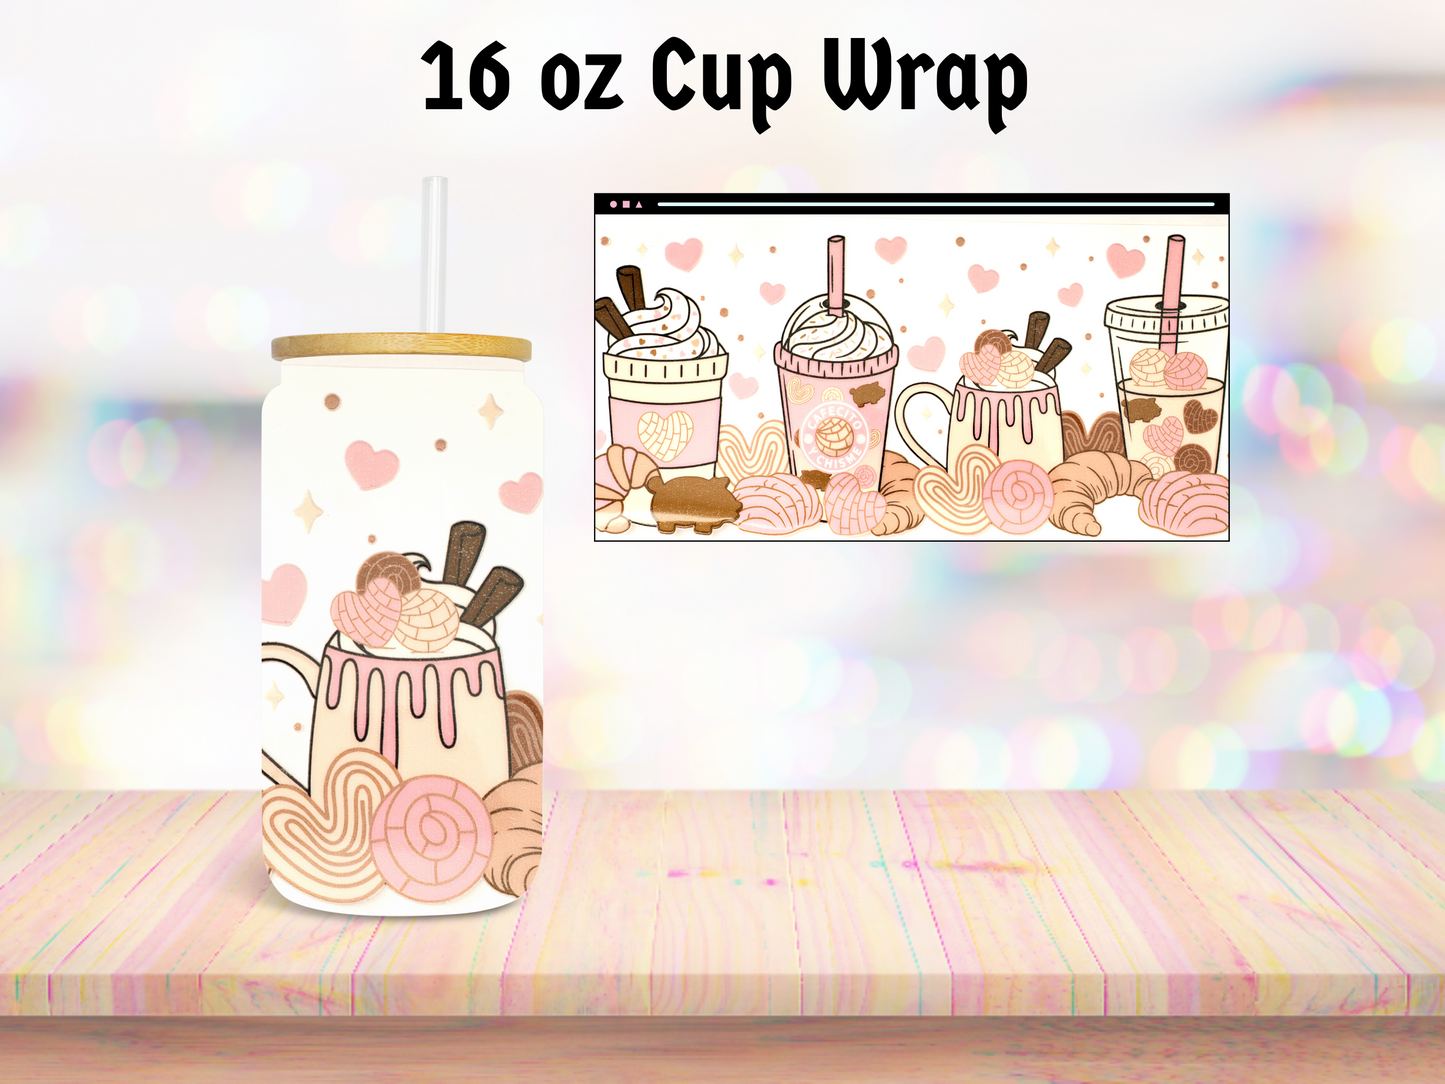 Cafecito 16oz Cup Wrap